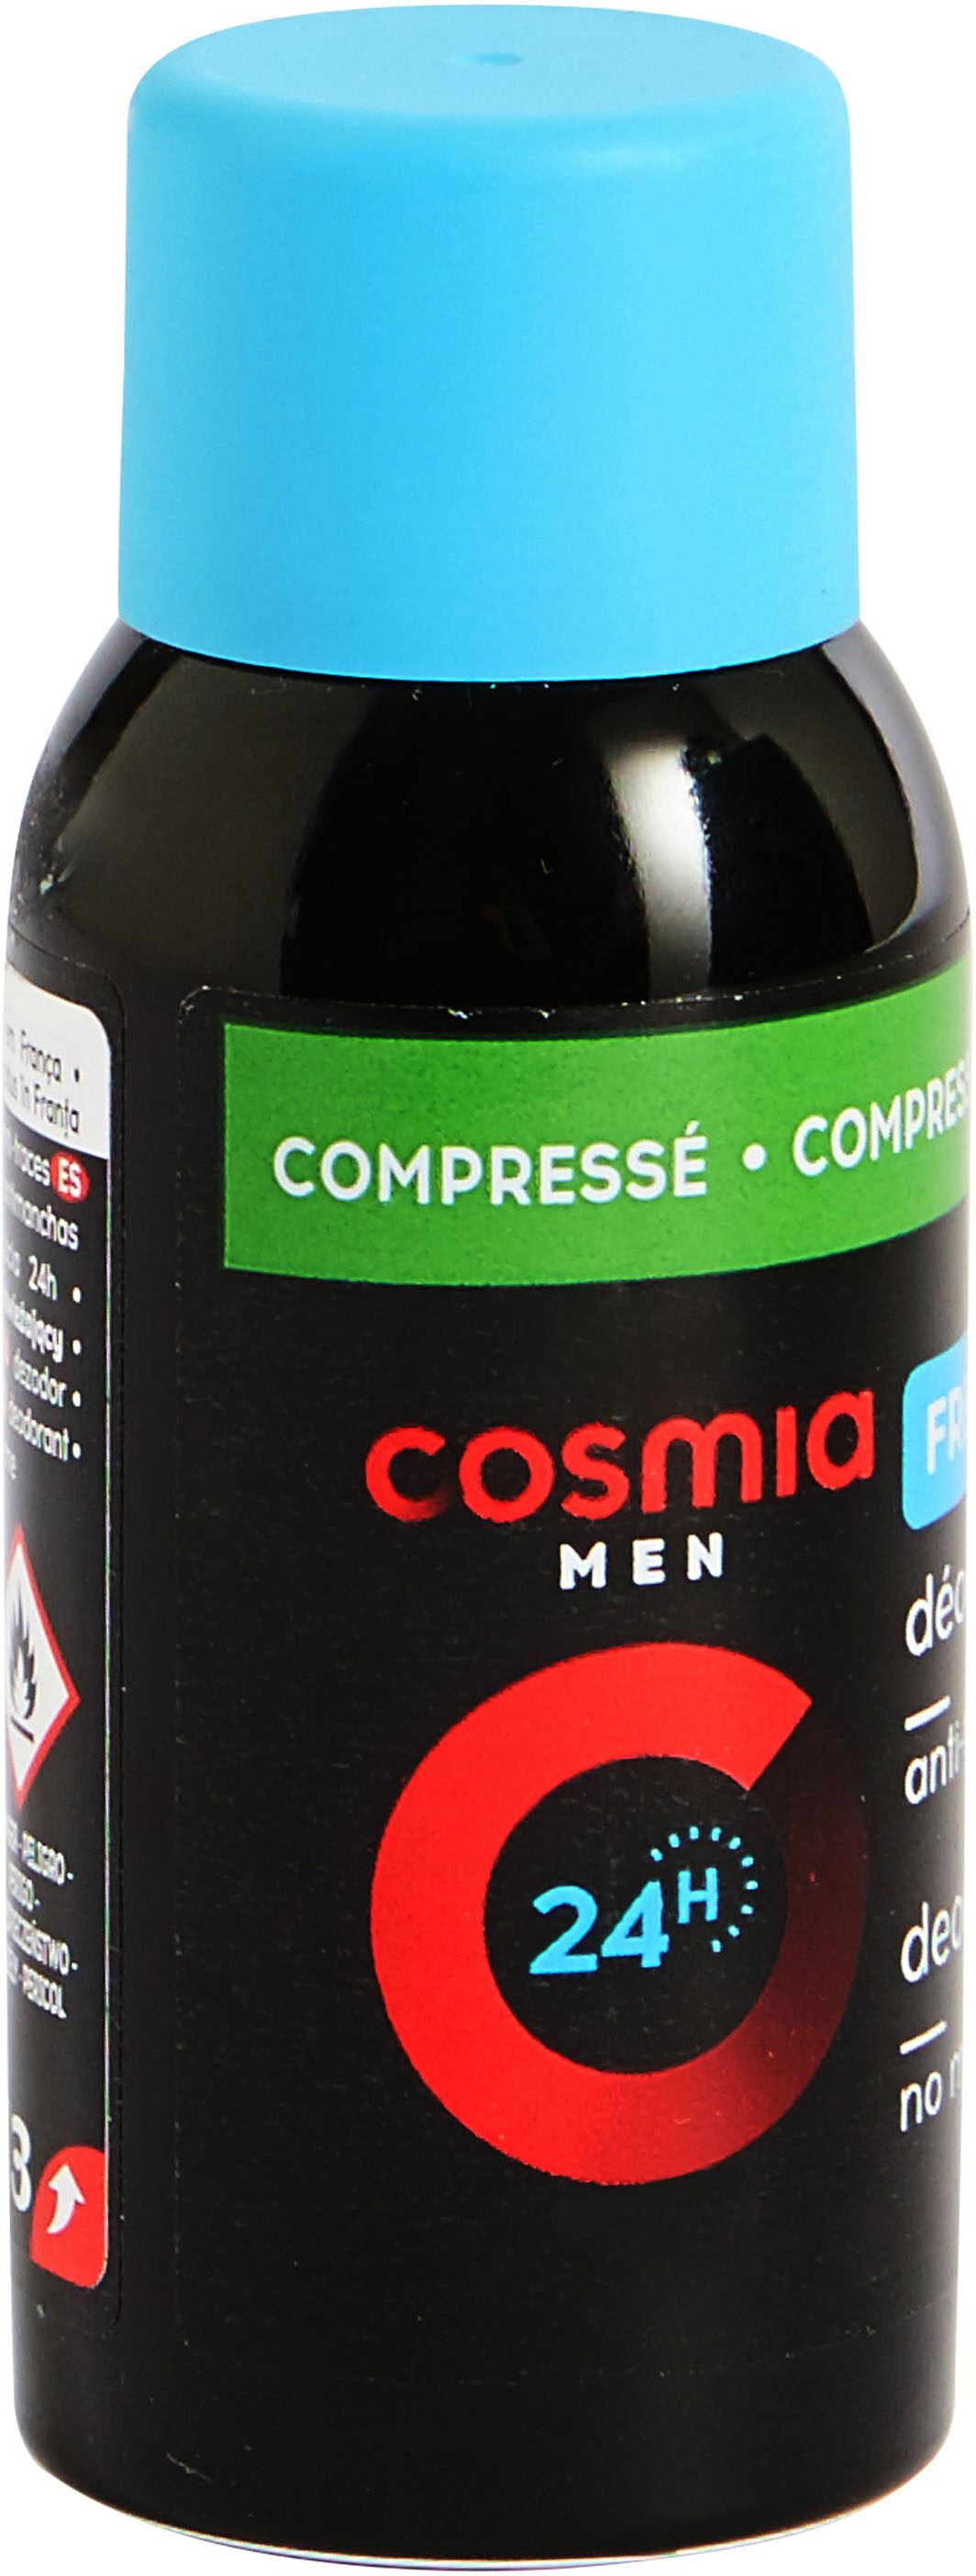 Cosmia deodorant homme atomiseur corps fraicheur 75 ml - Tuote - fr